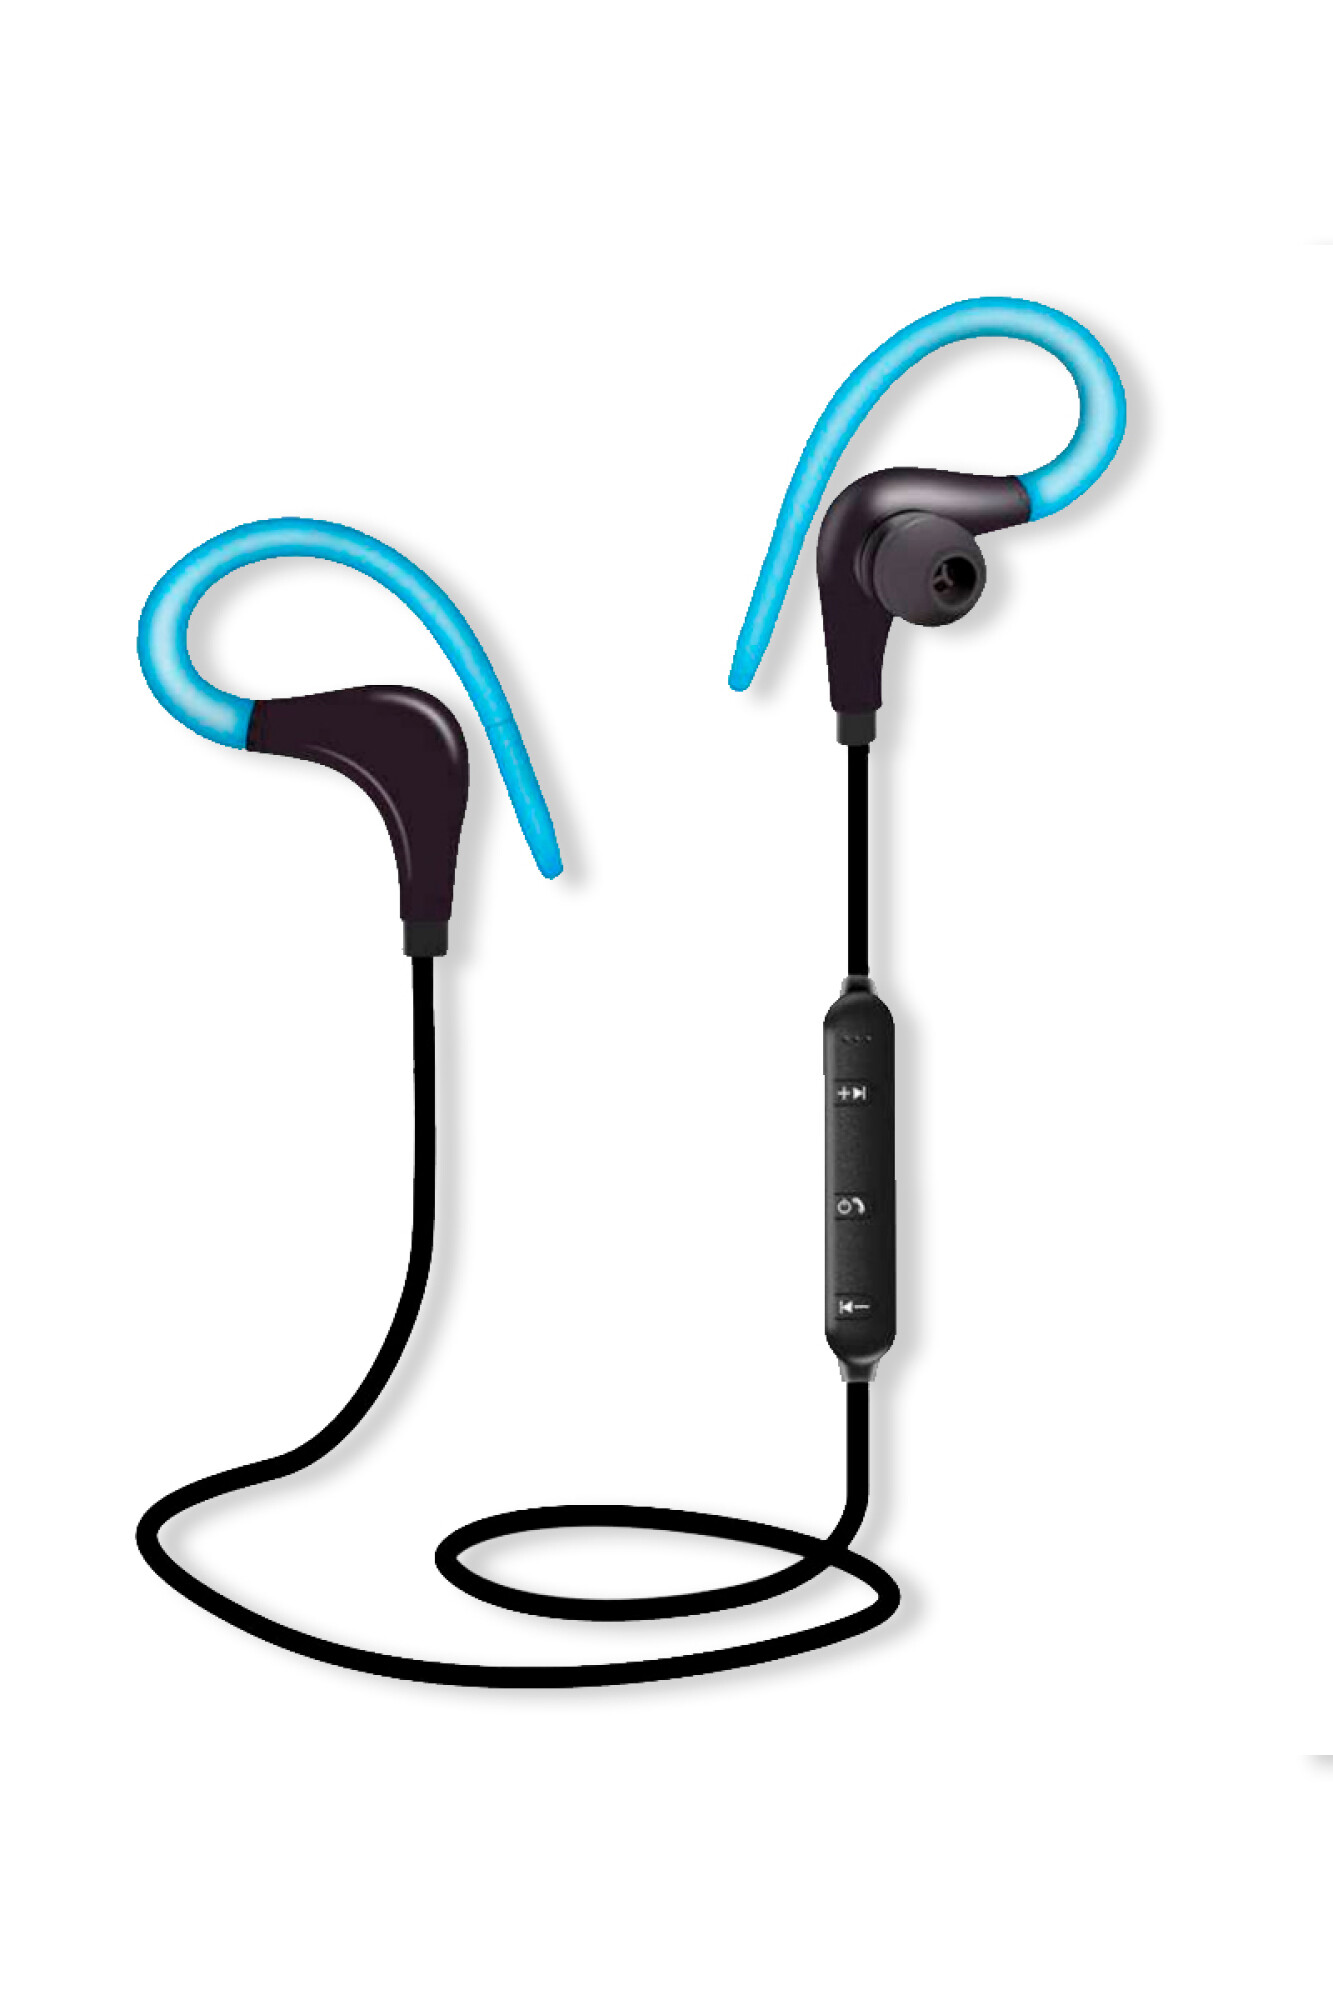 Auriculares inalámbricos Bluetooth Sport - Auriculares Bluetooth